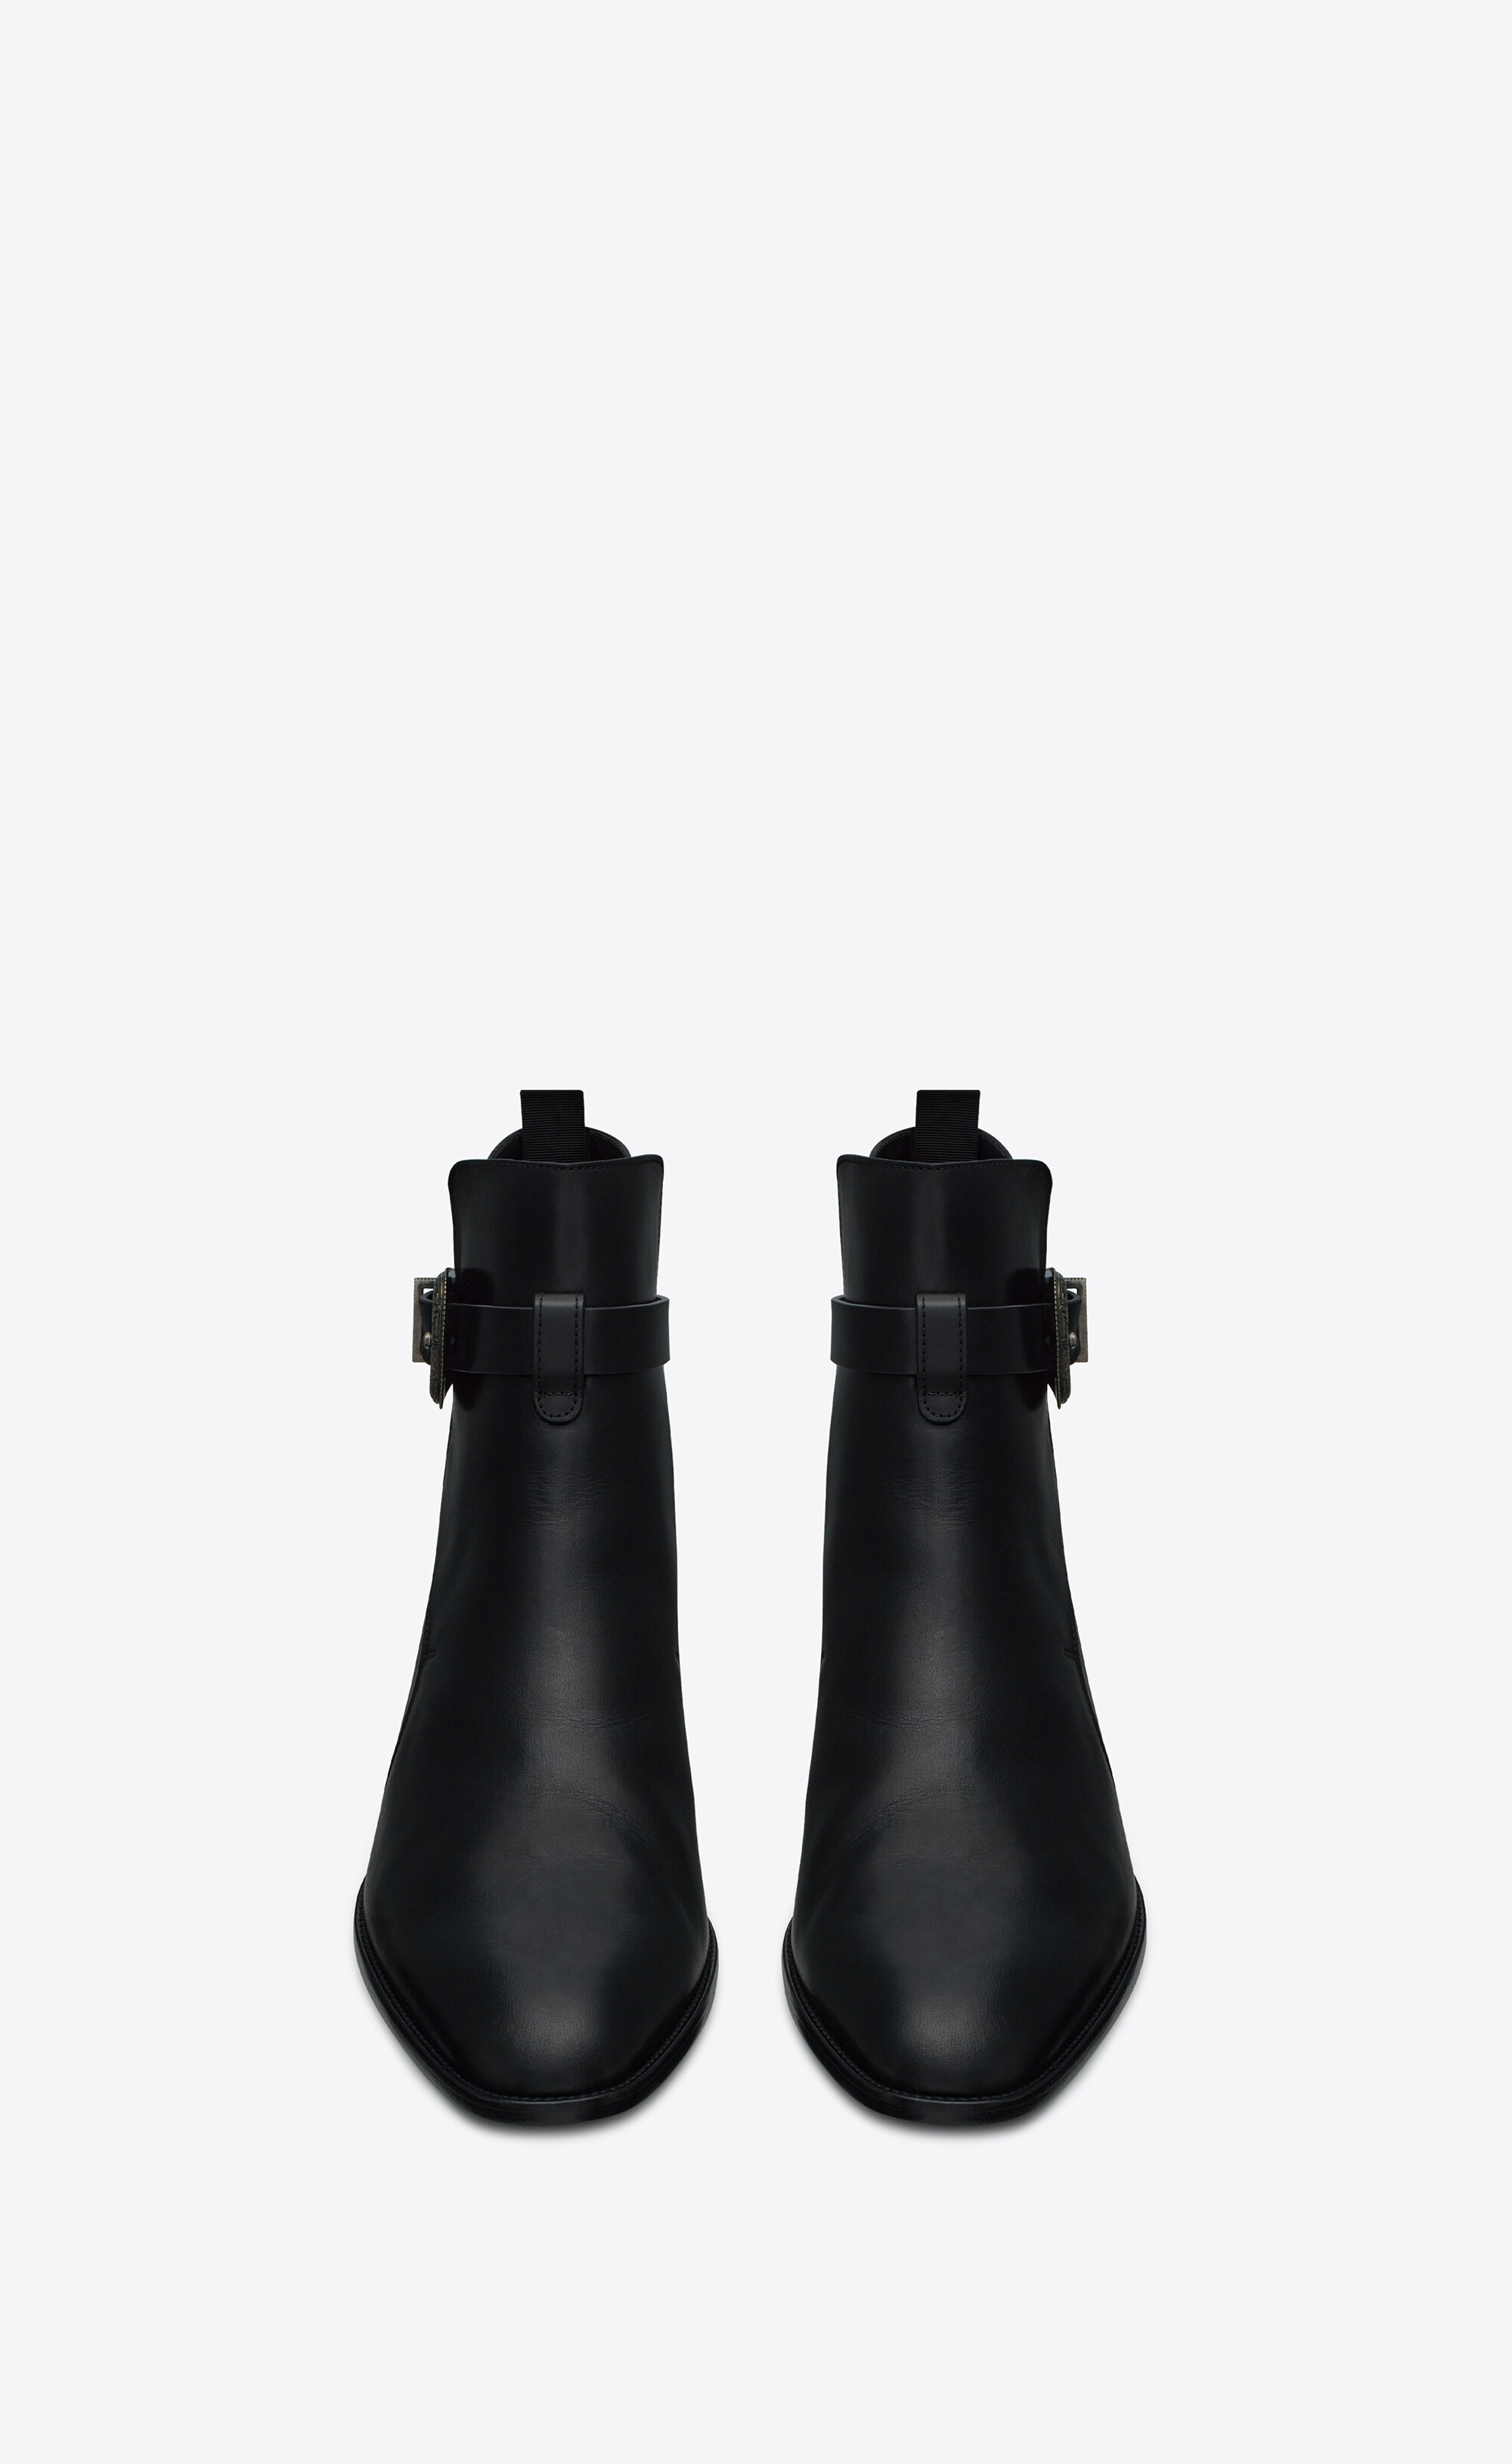 wyatt jodhpur boots in smooth leather - 2